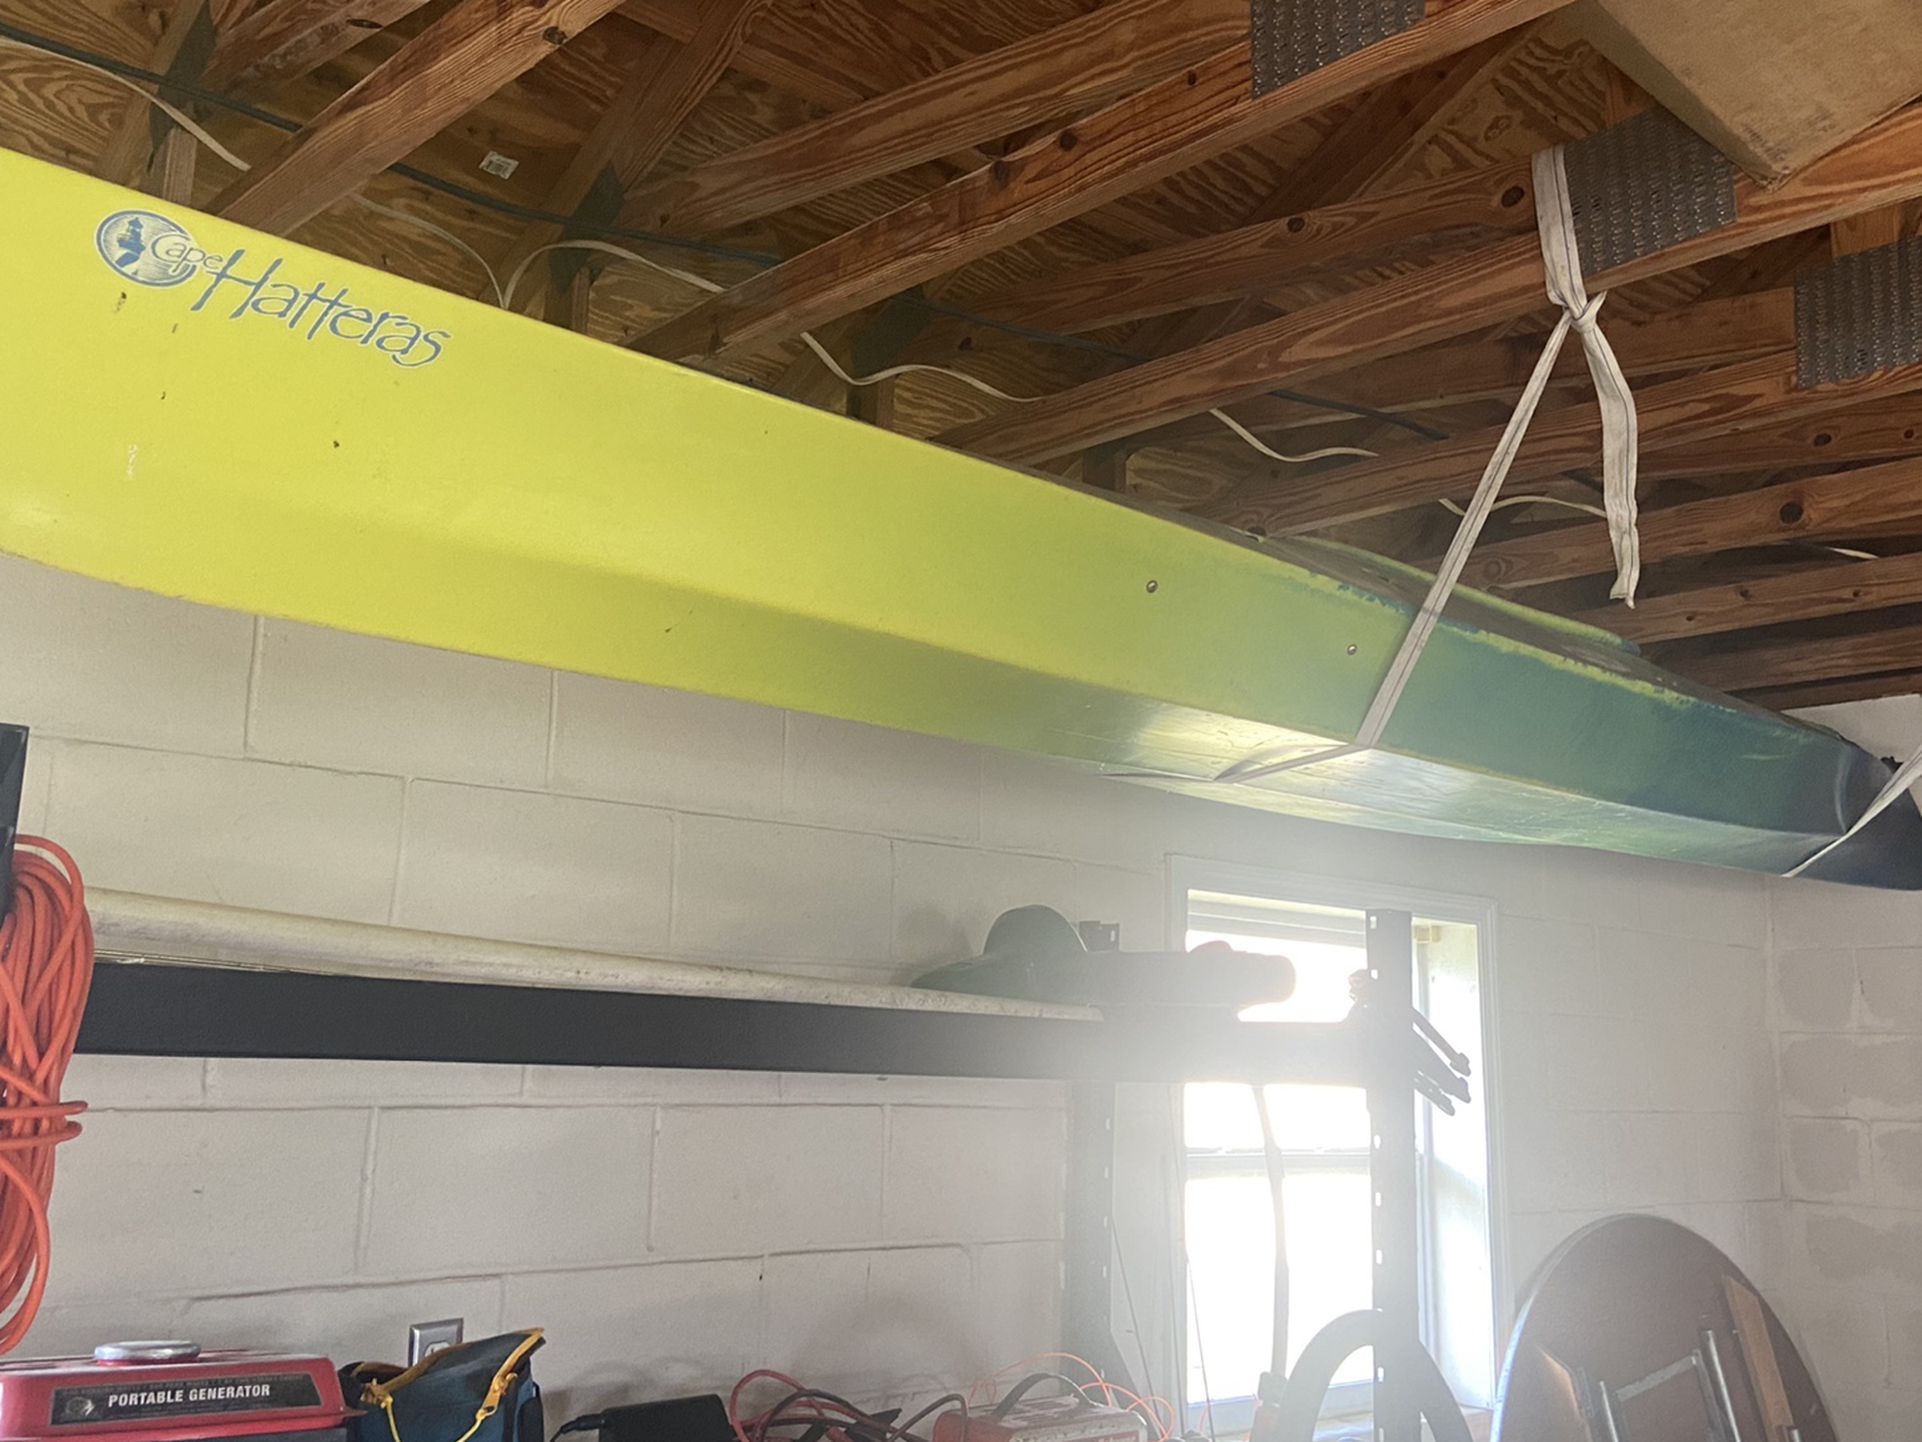 Cape Hatteras 15ft Kayak